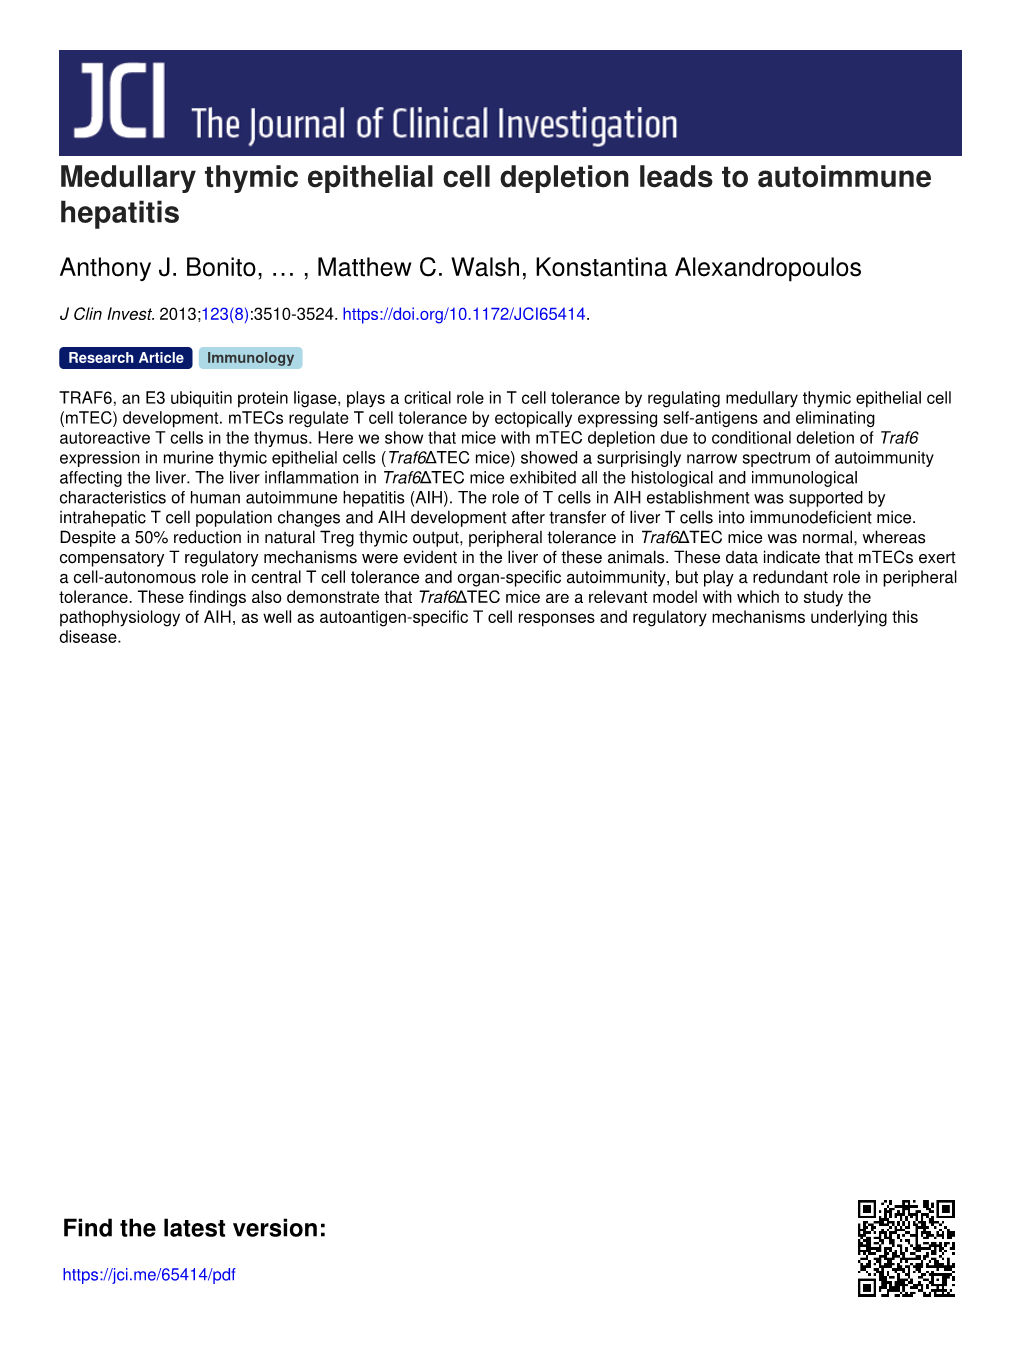 Medullary Thymic Epithelial Cell Depletion Leads to Autoimmune Hepatitis